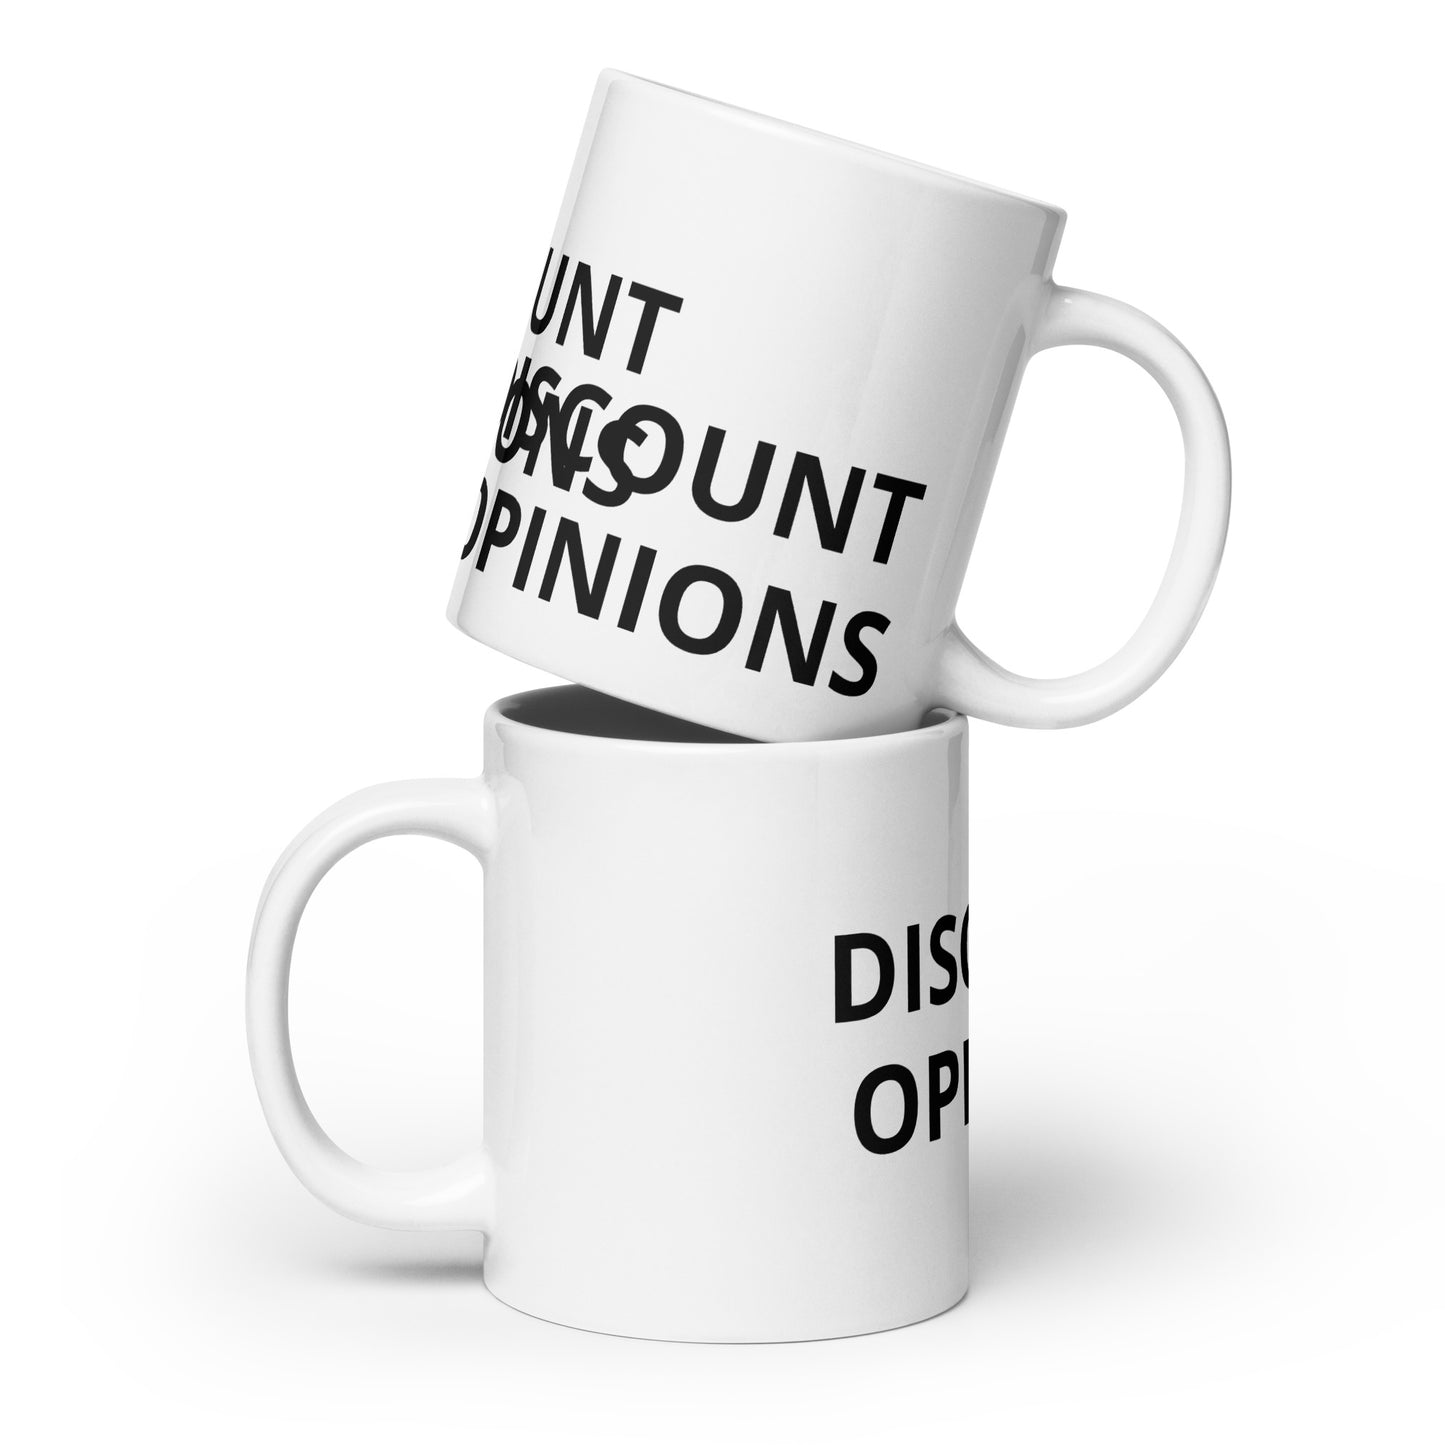 DISCOUNT OPINIONS White glossy mug